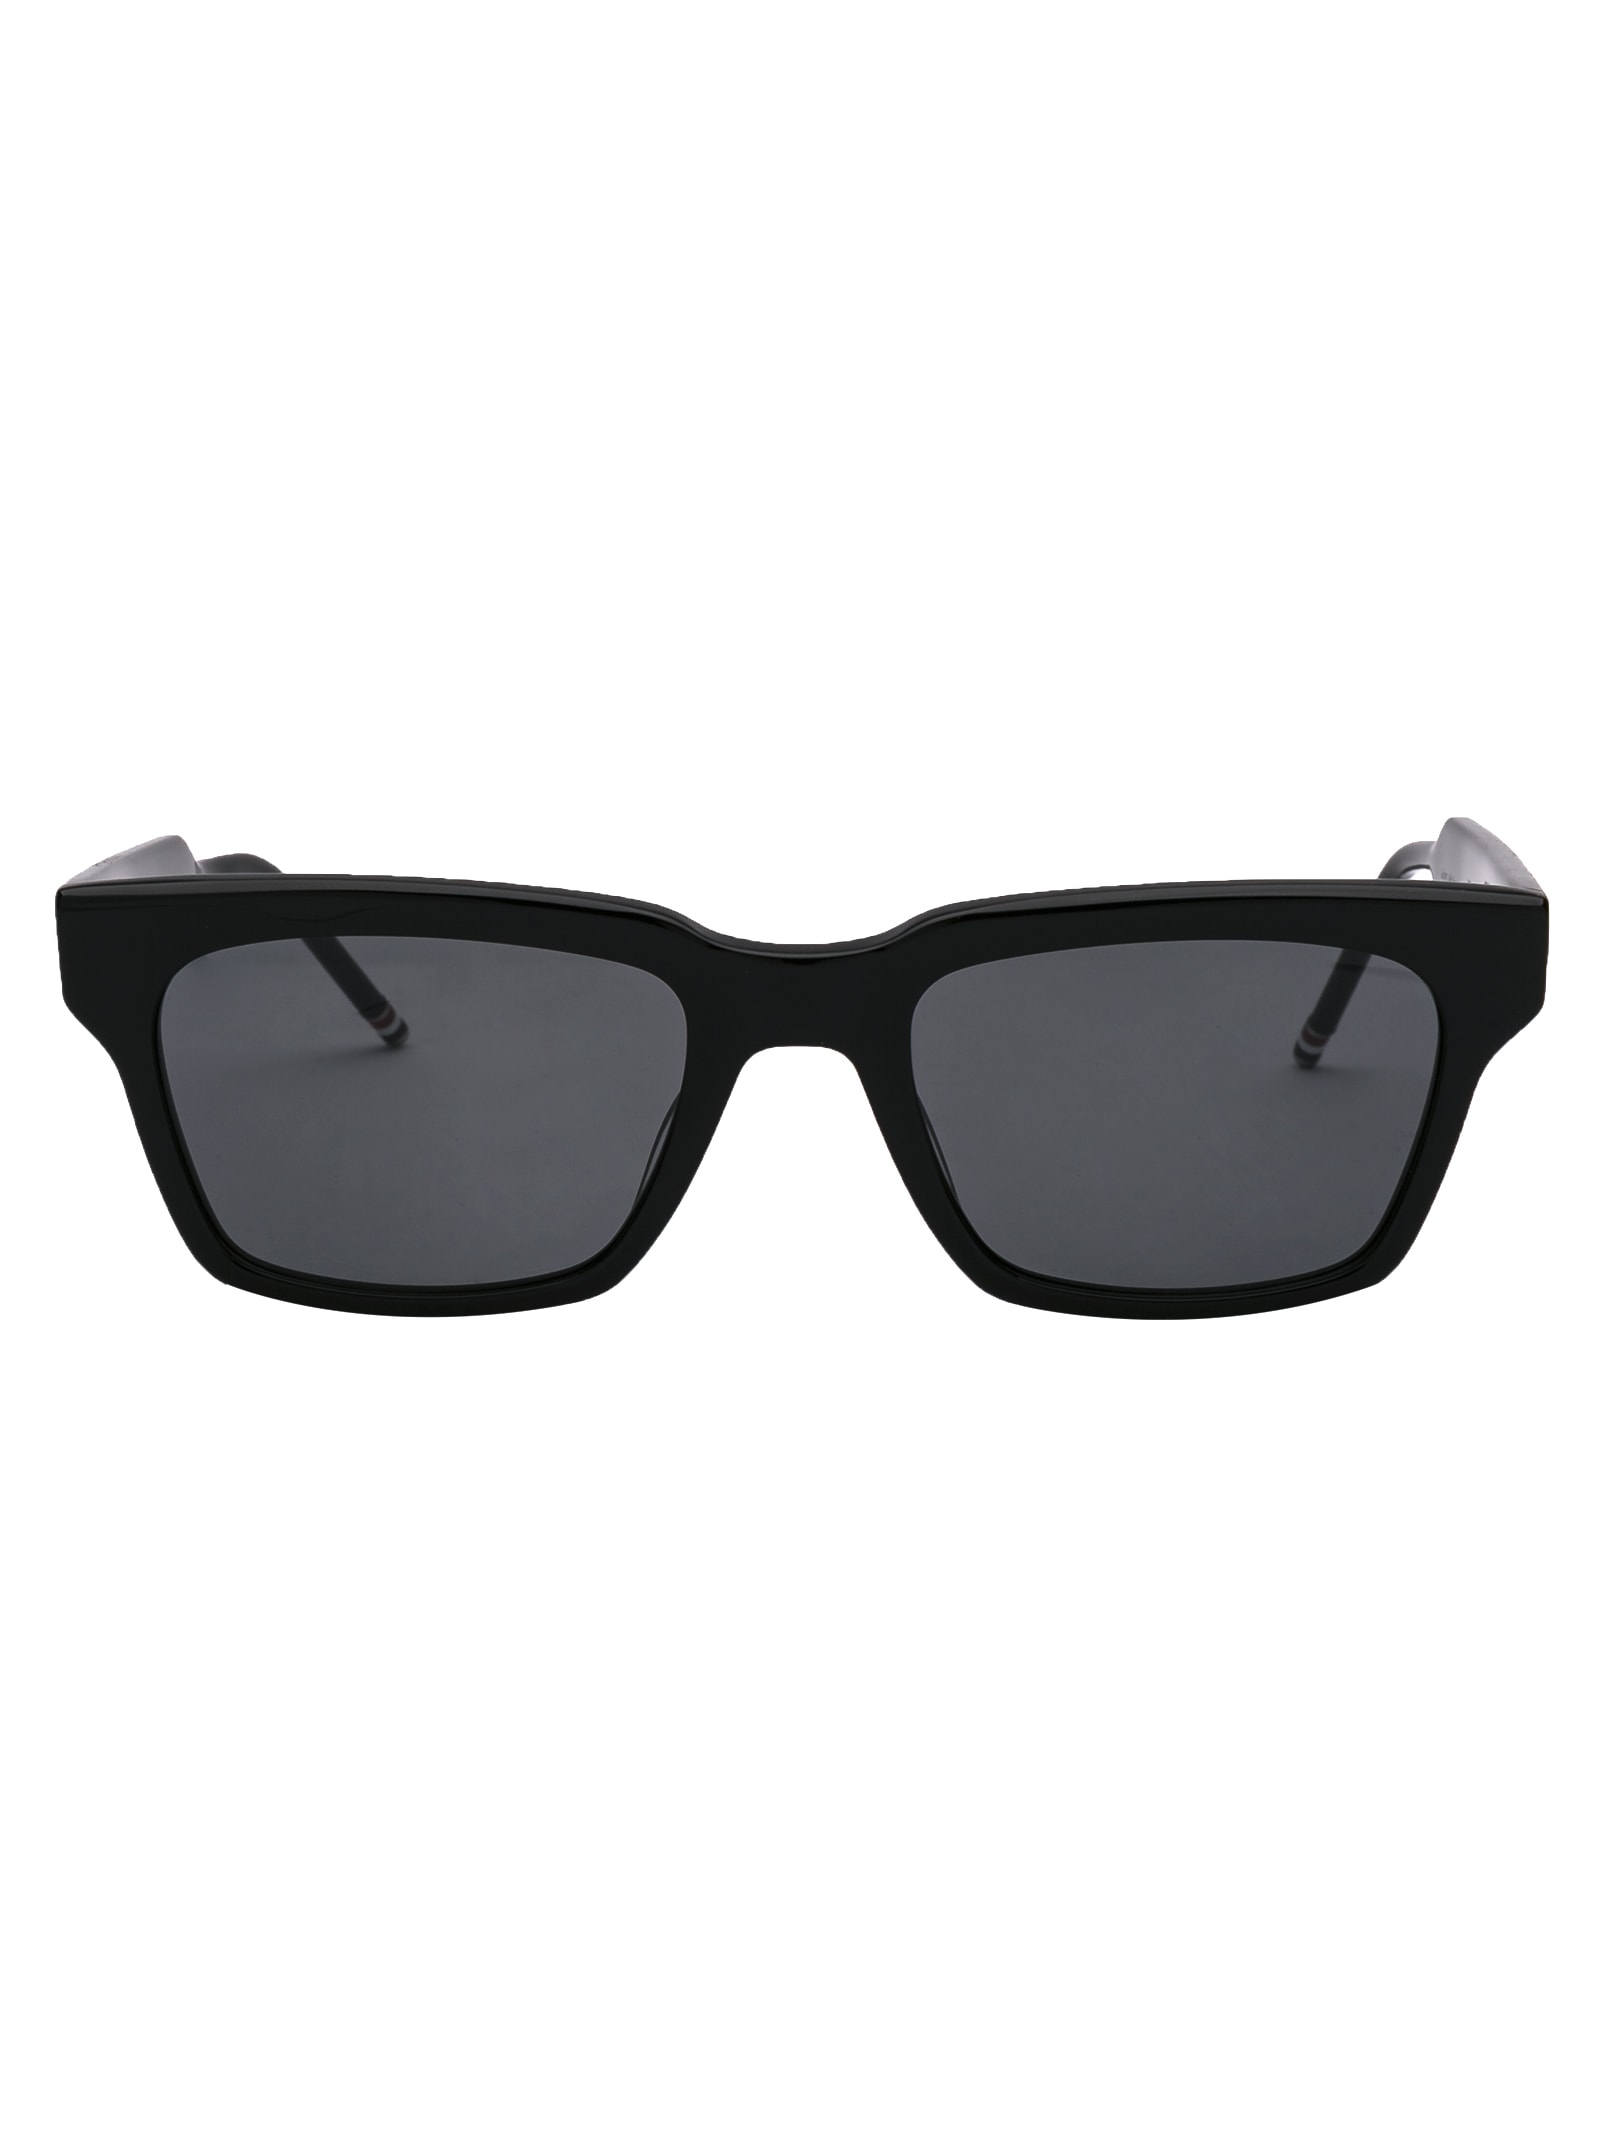 Thom Browne Tb-418 Sunglasses